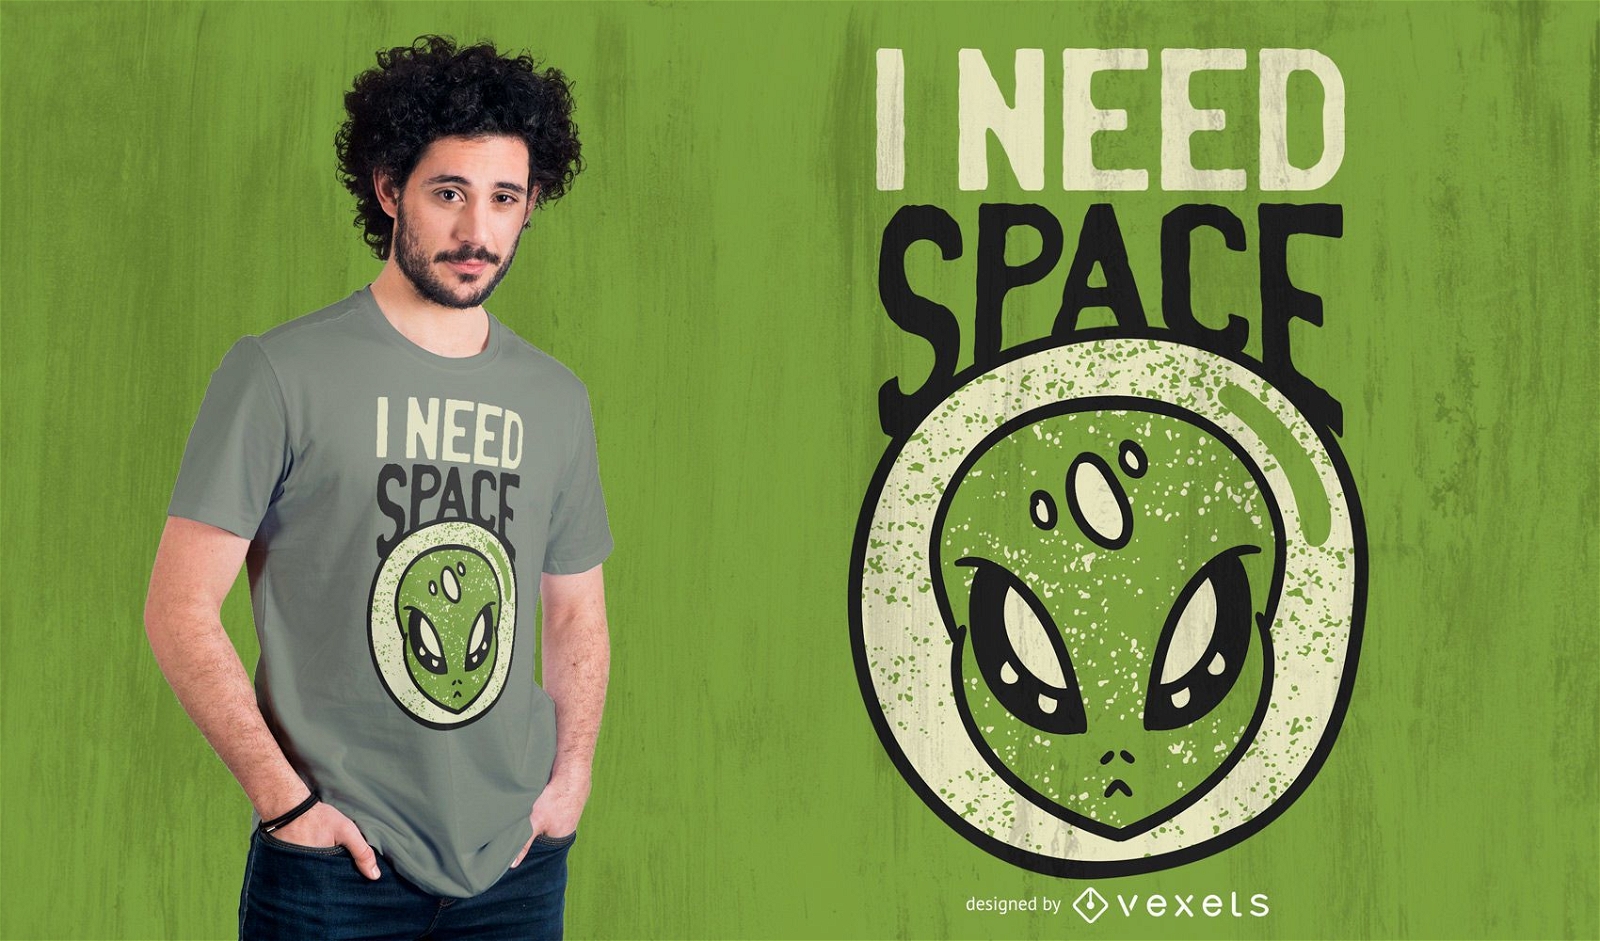 Need space alien t-shirt design